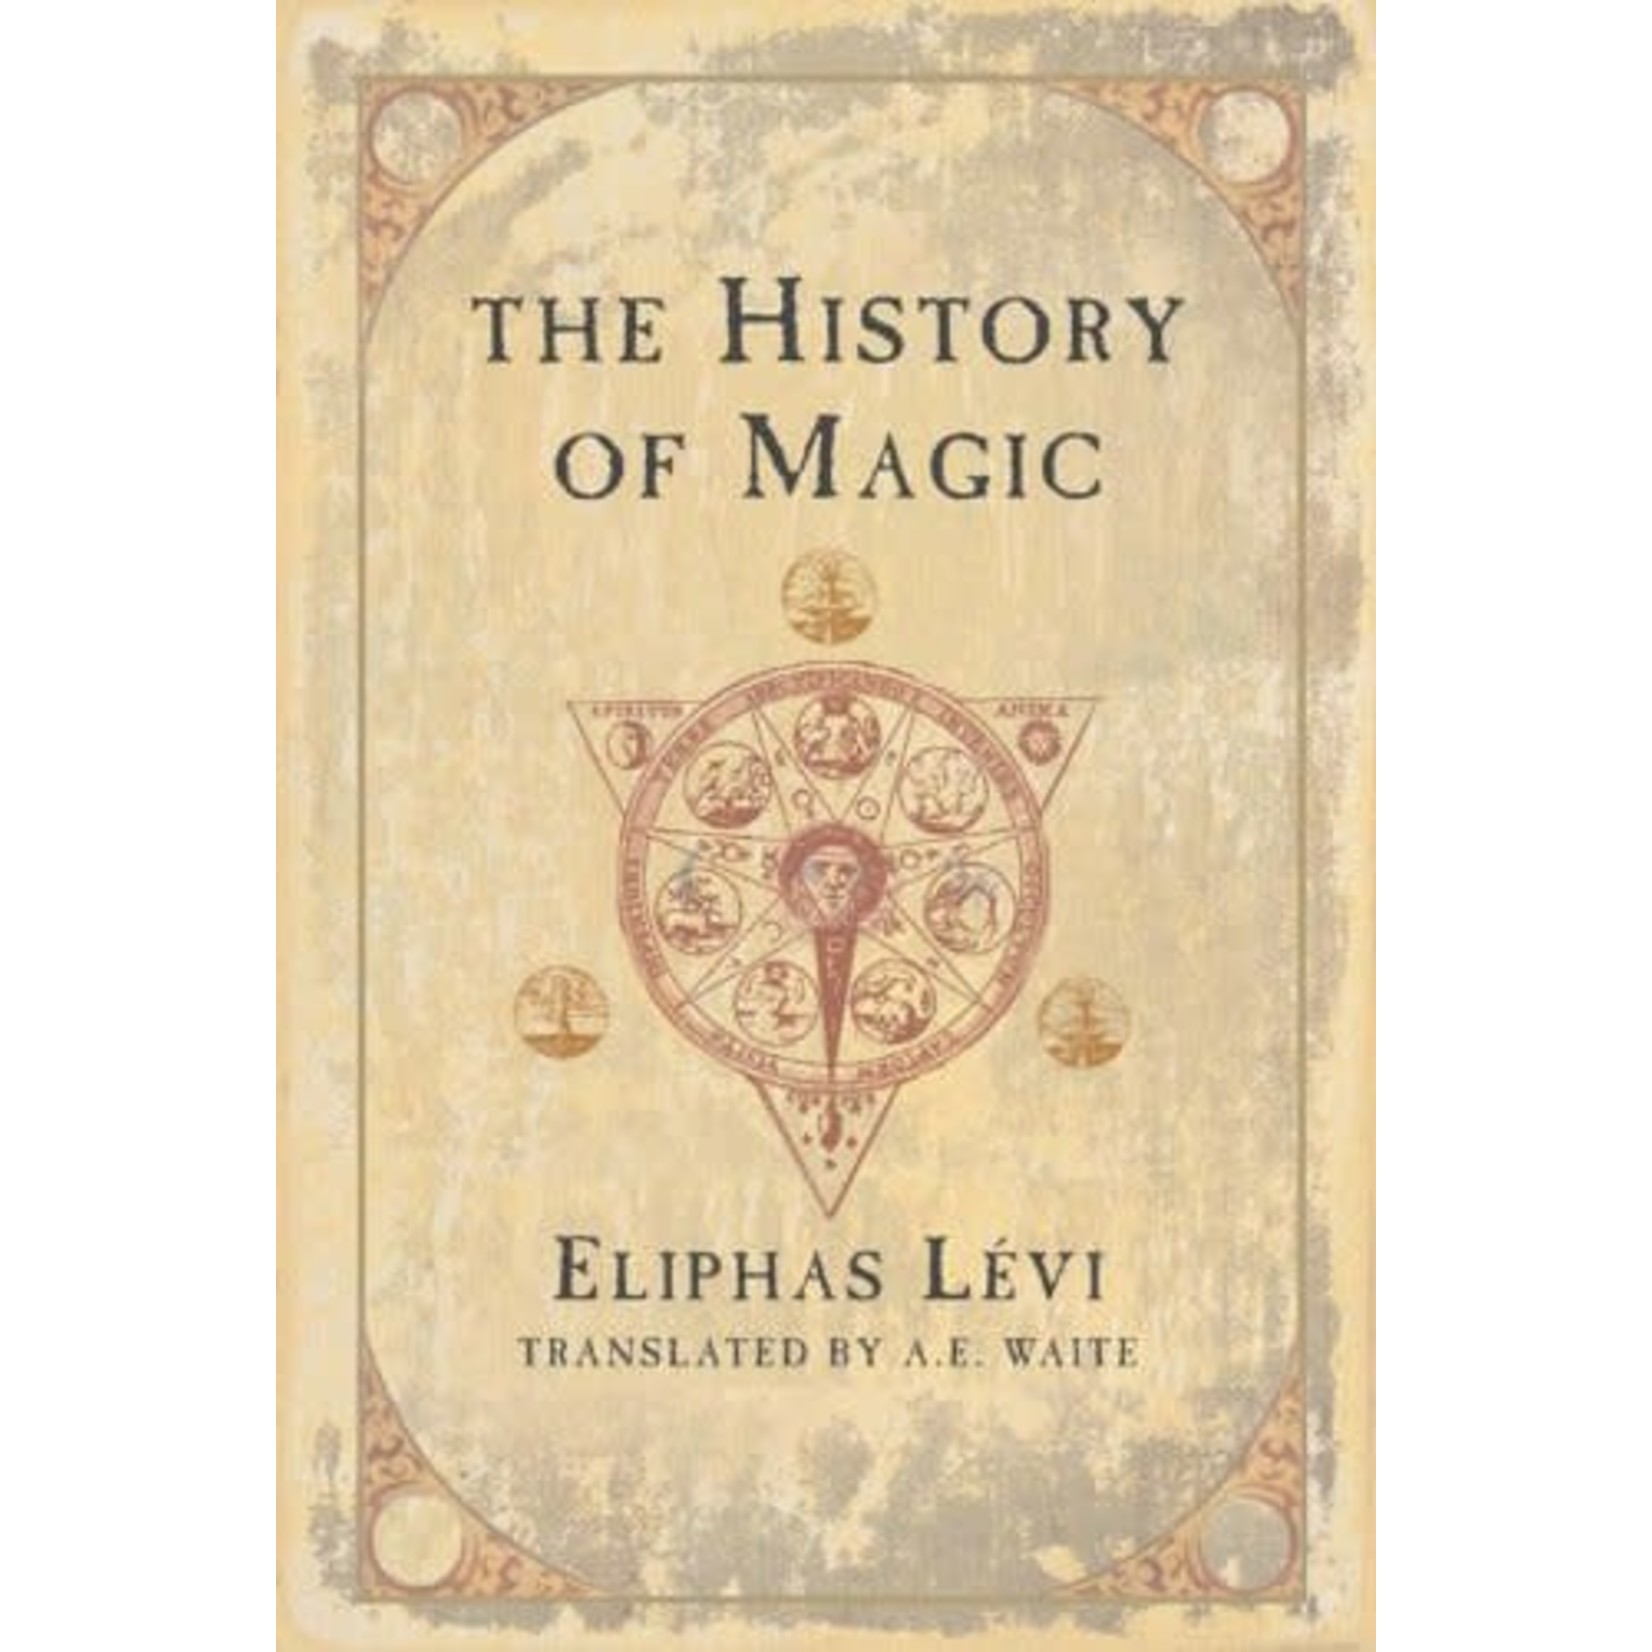 The History of Magic by Elphias Levi